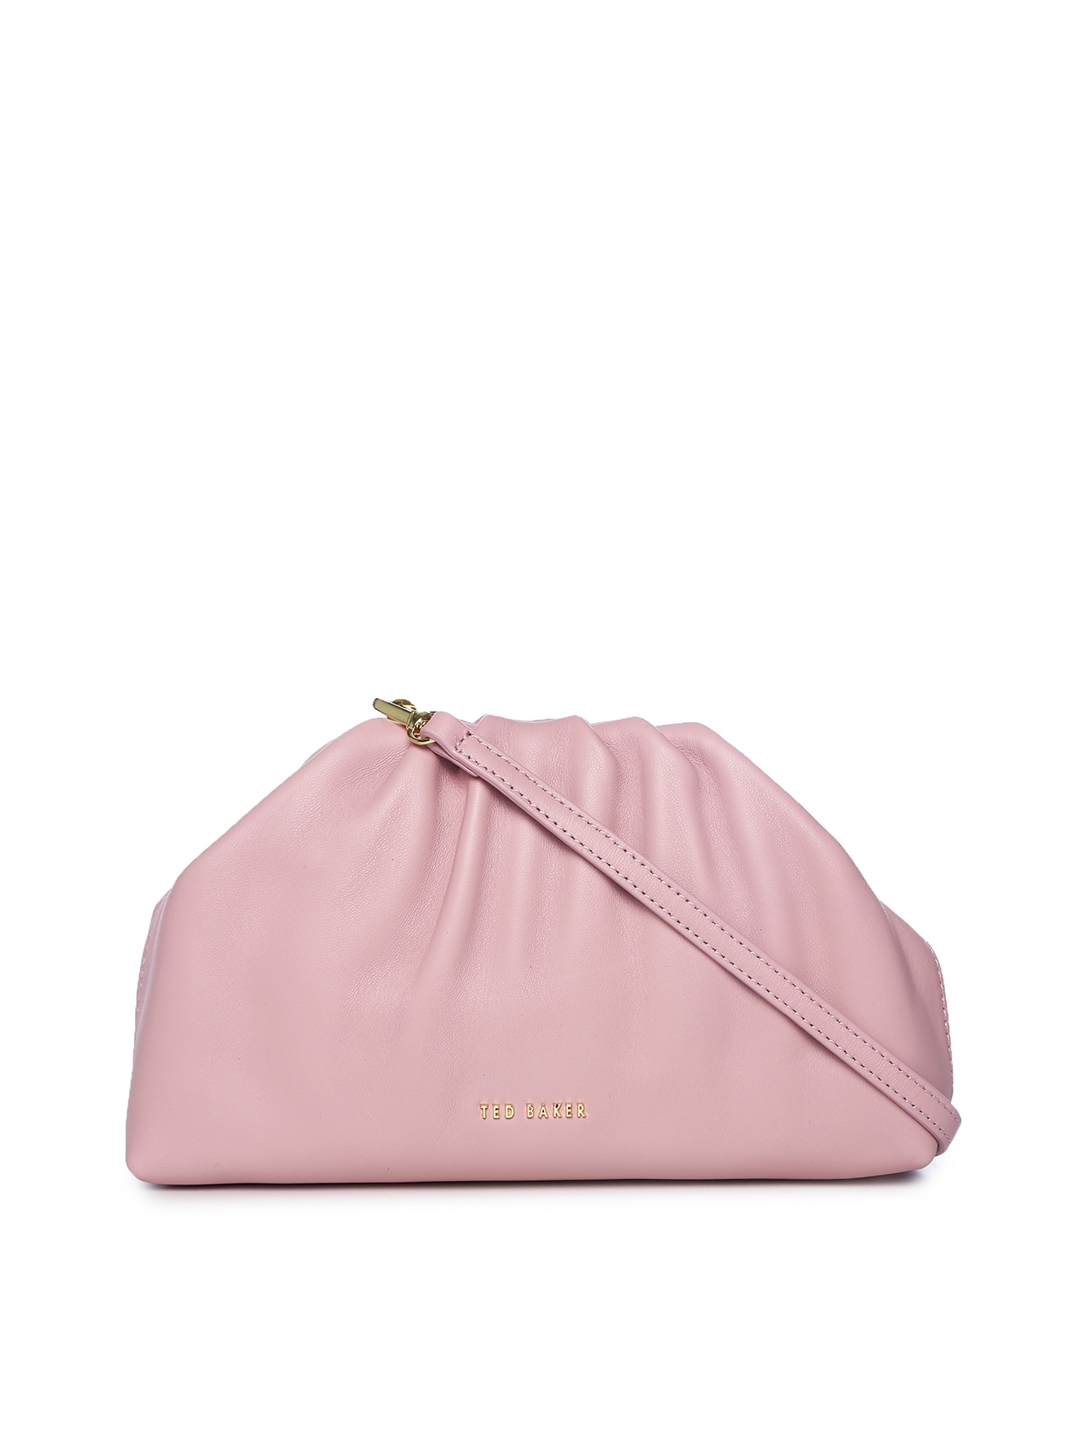 Ted Baker Pink Leather Structured Hobo Bag